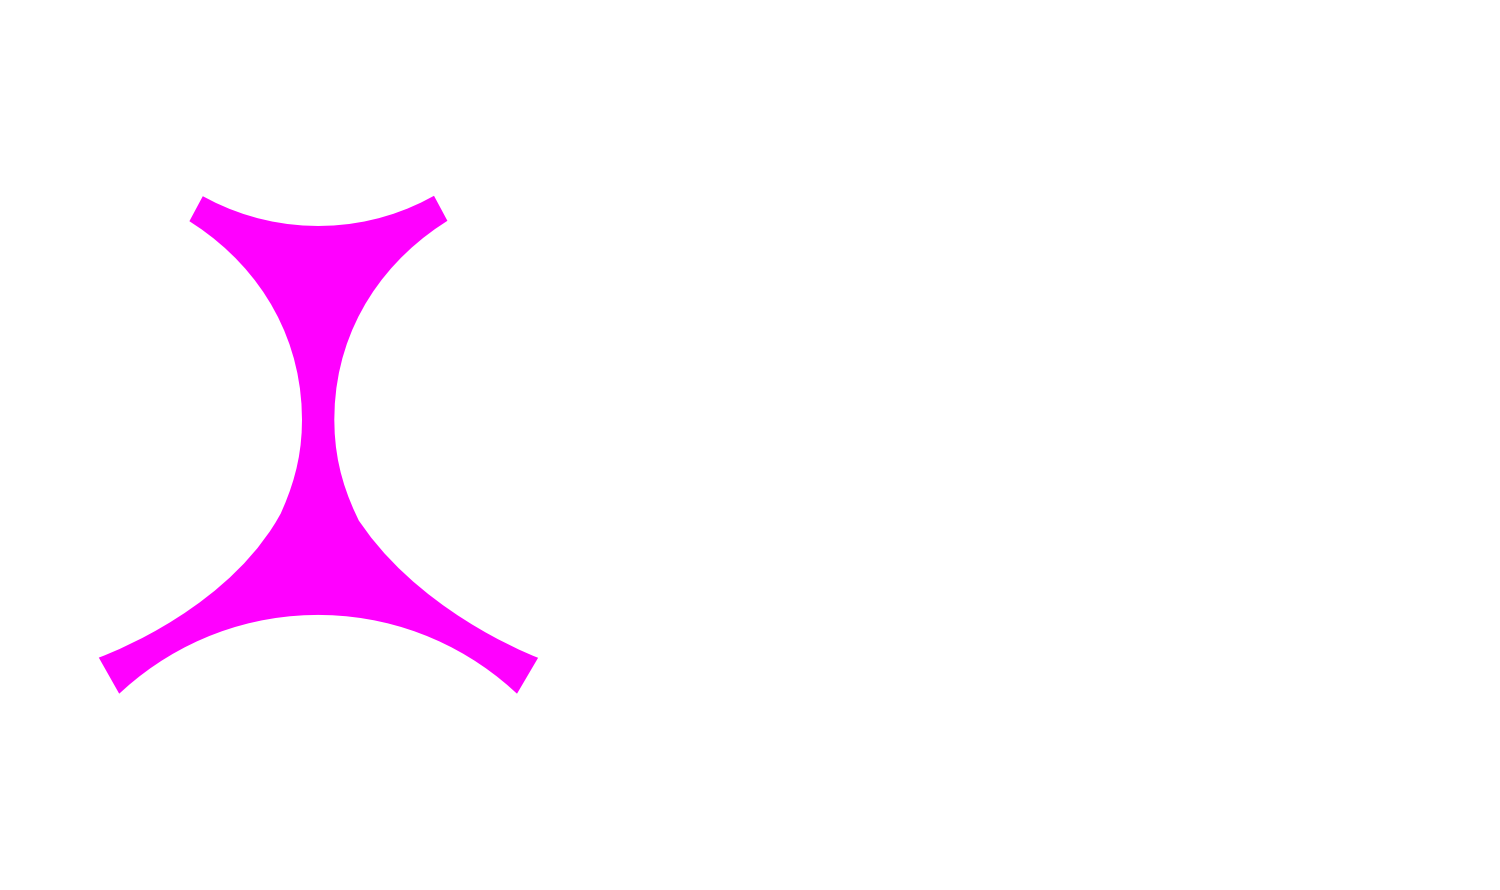 katcasino_logo 